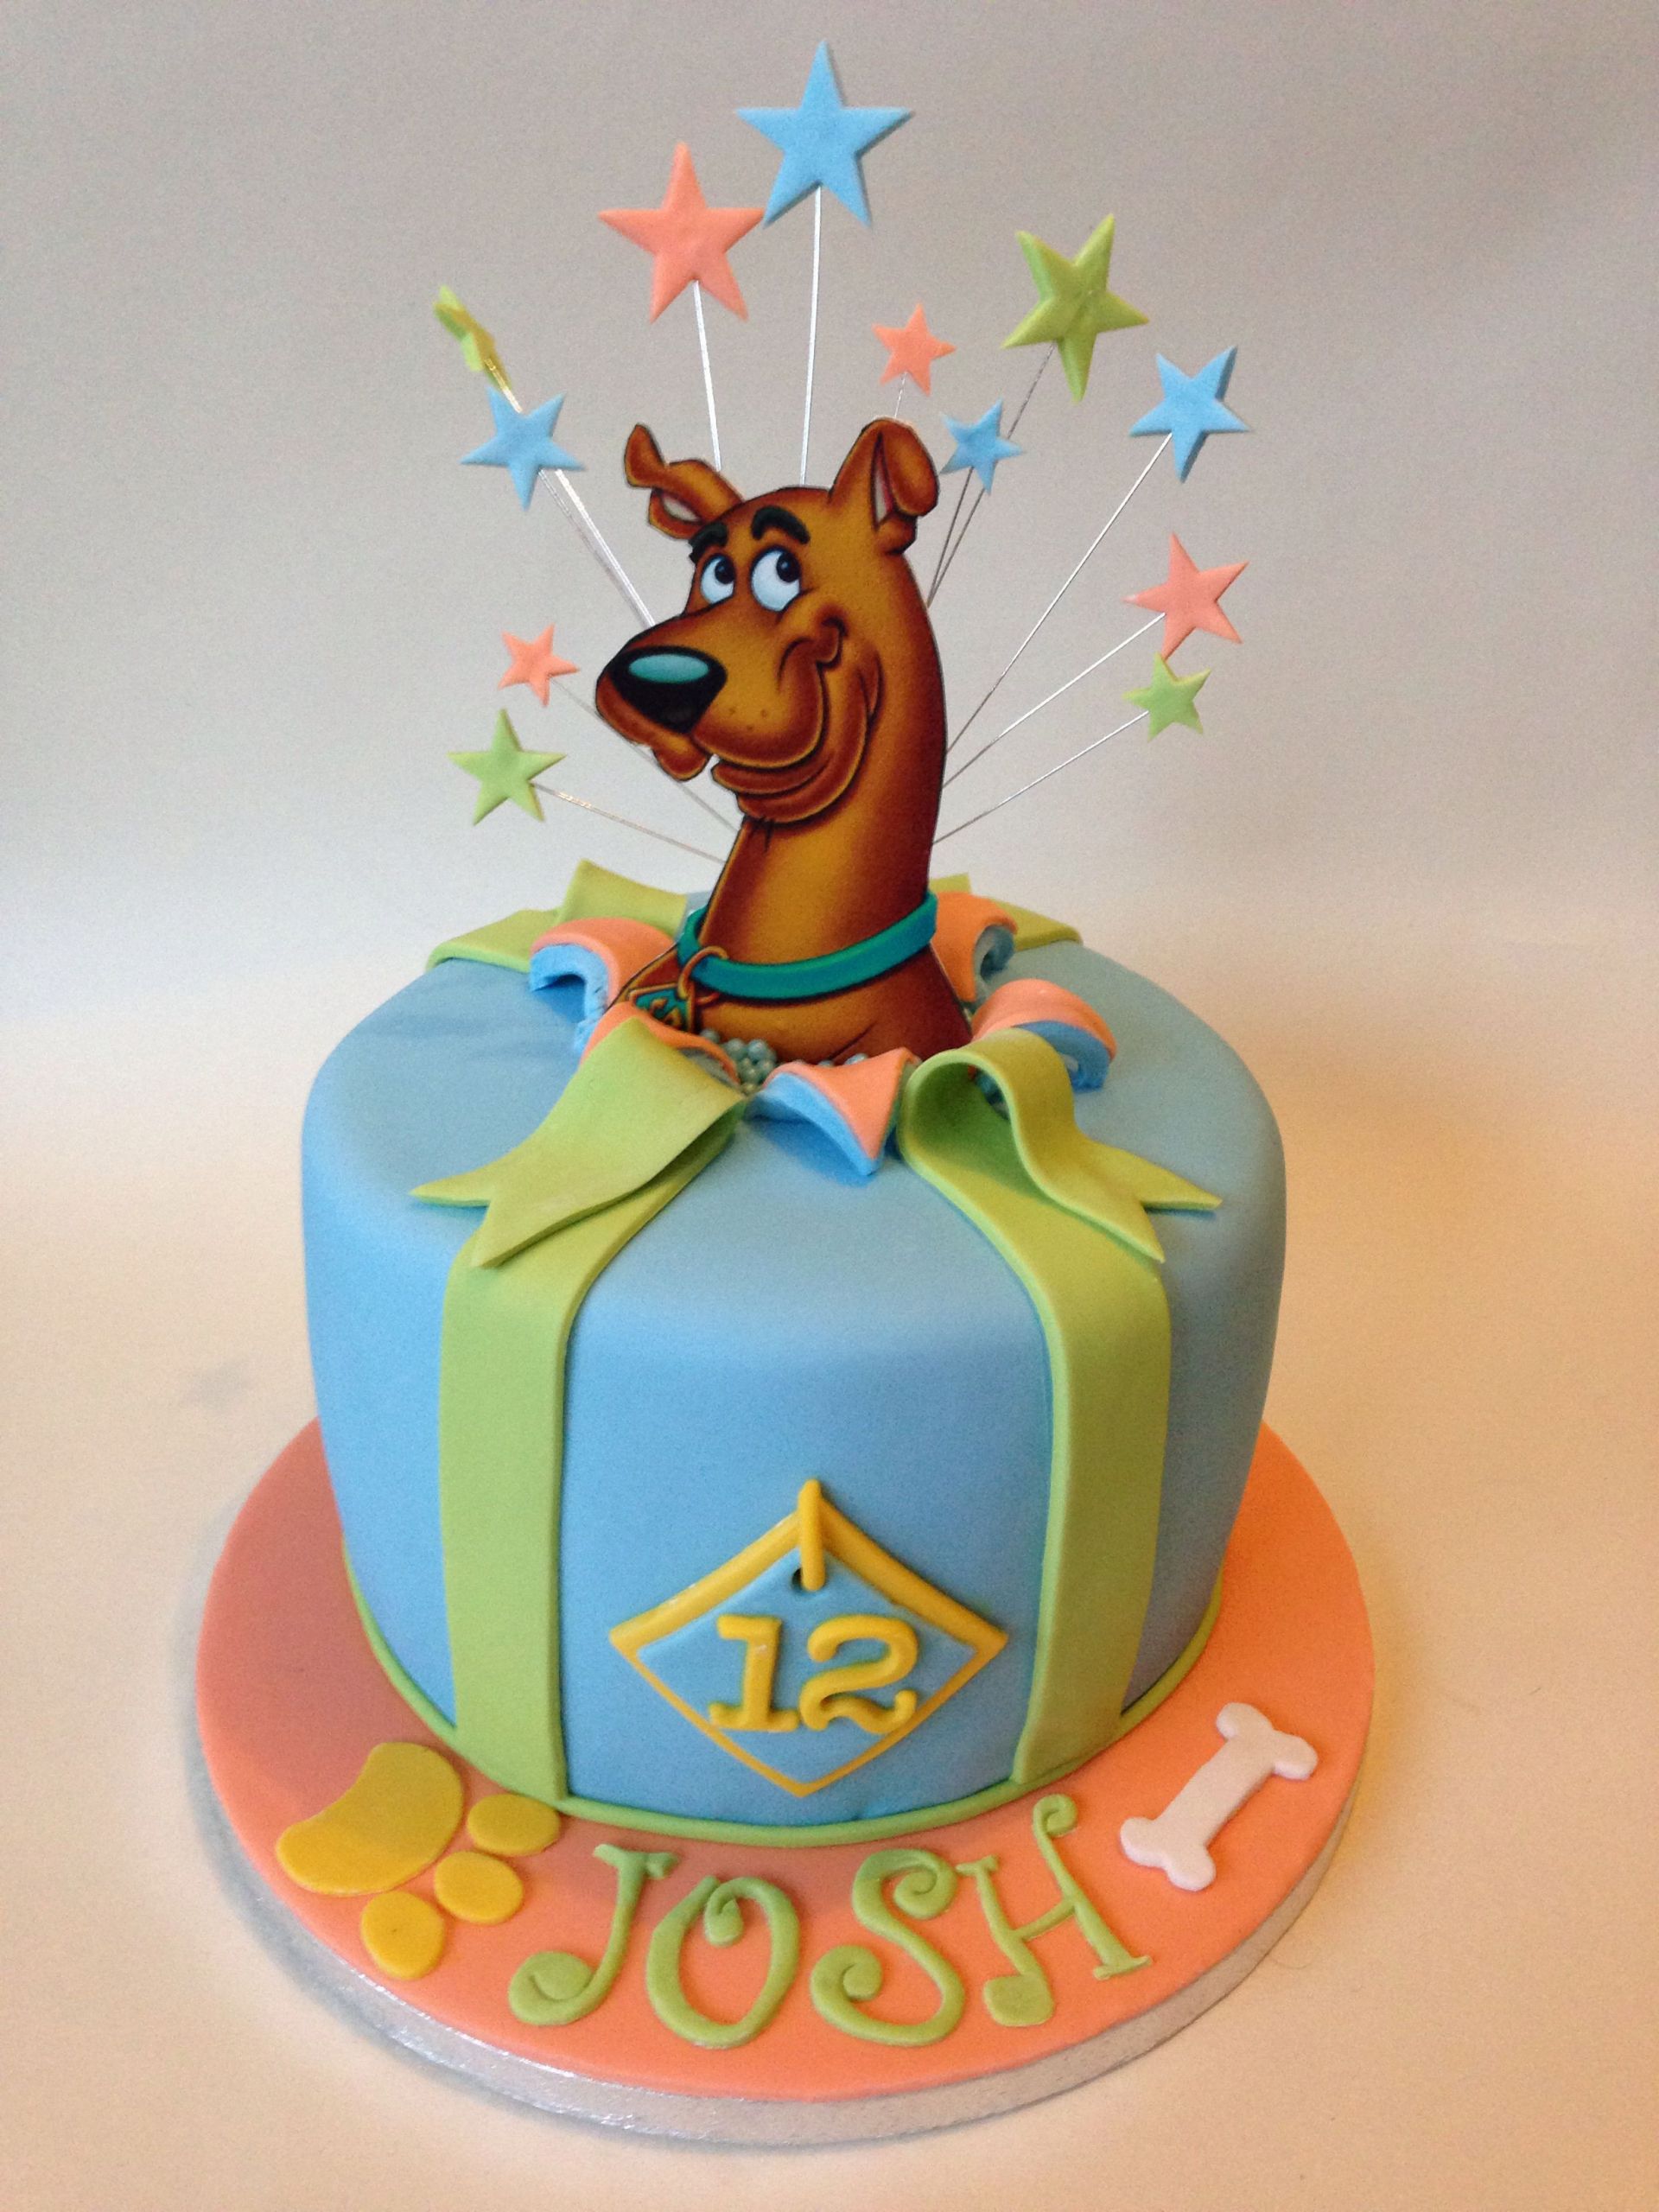 Scooby Doo Birthday Cake
 Scooby Doo Cake